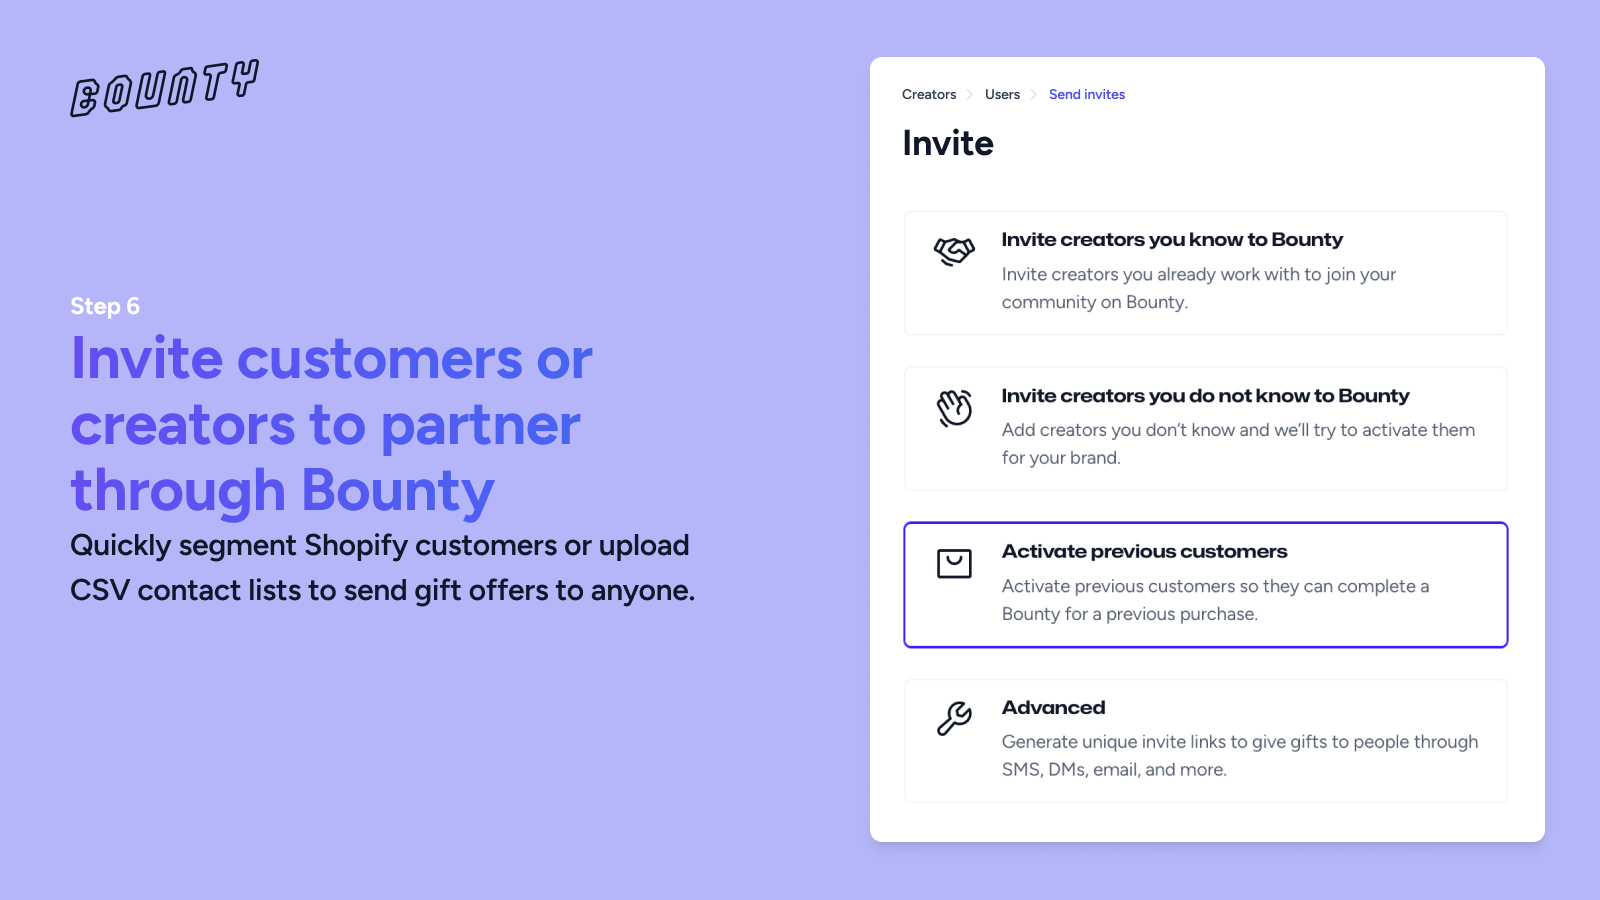 Step 6 - Invite customers or creators to partner through Bounty